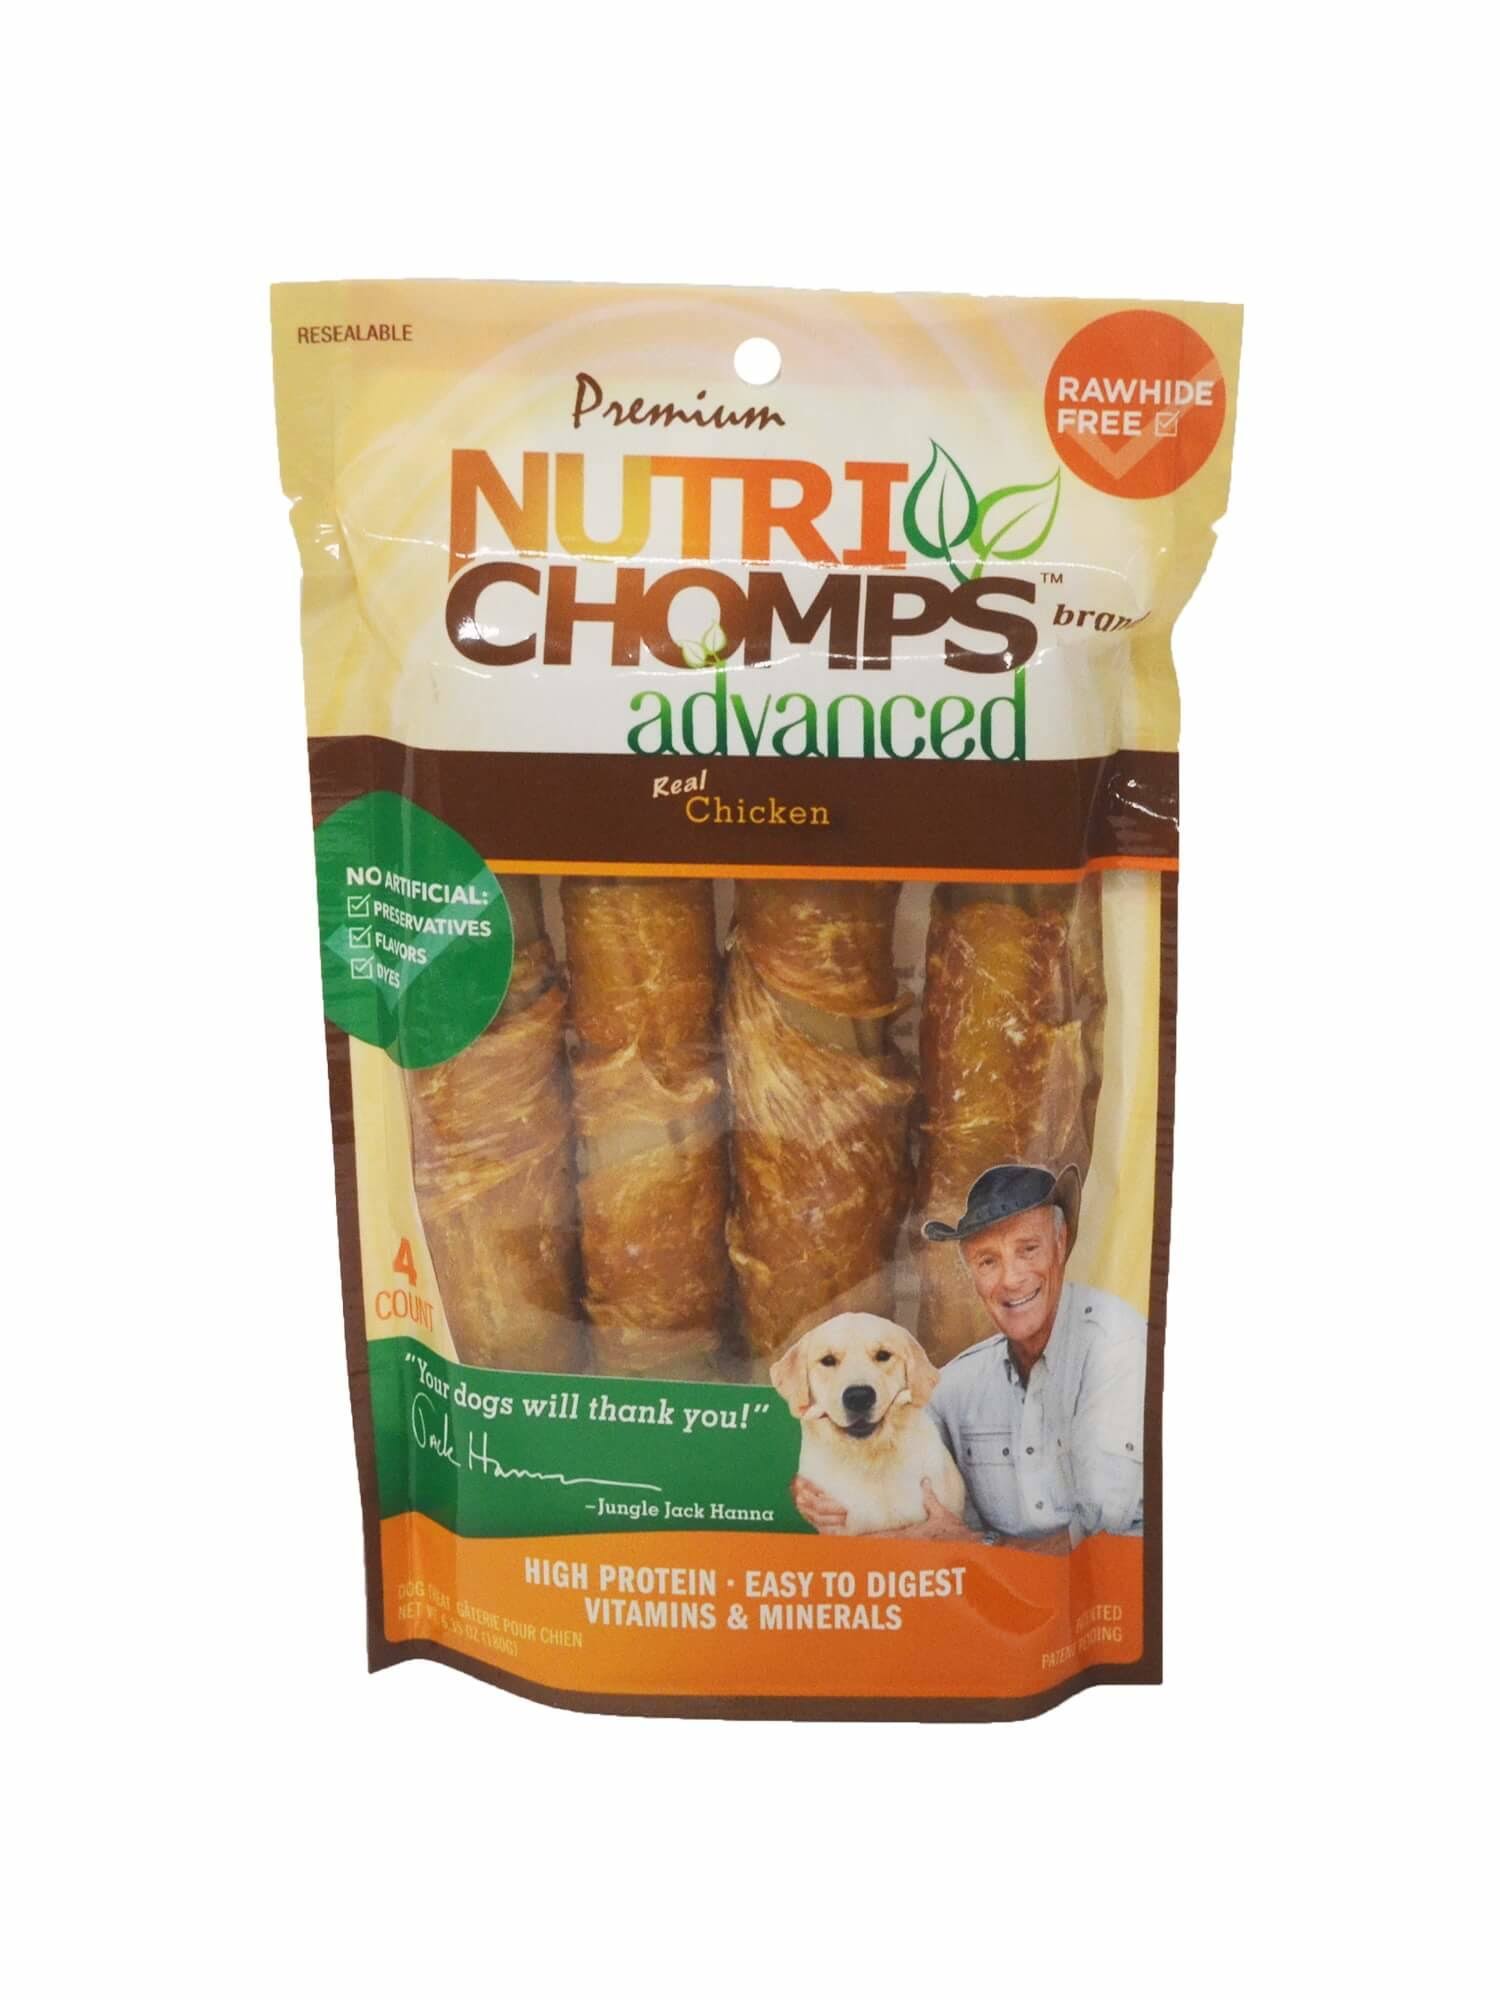 Nutri Chomps Advanced Twists Dog Treat Chicken Flavor 4 Count